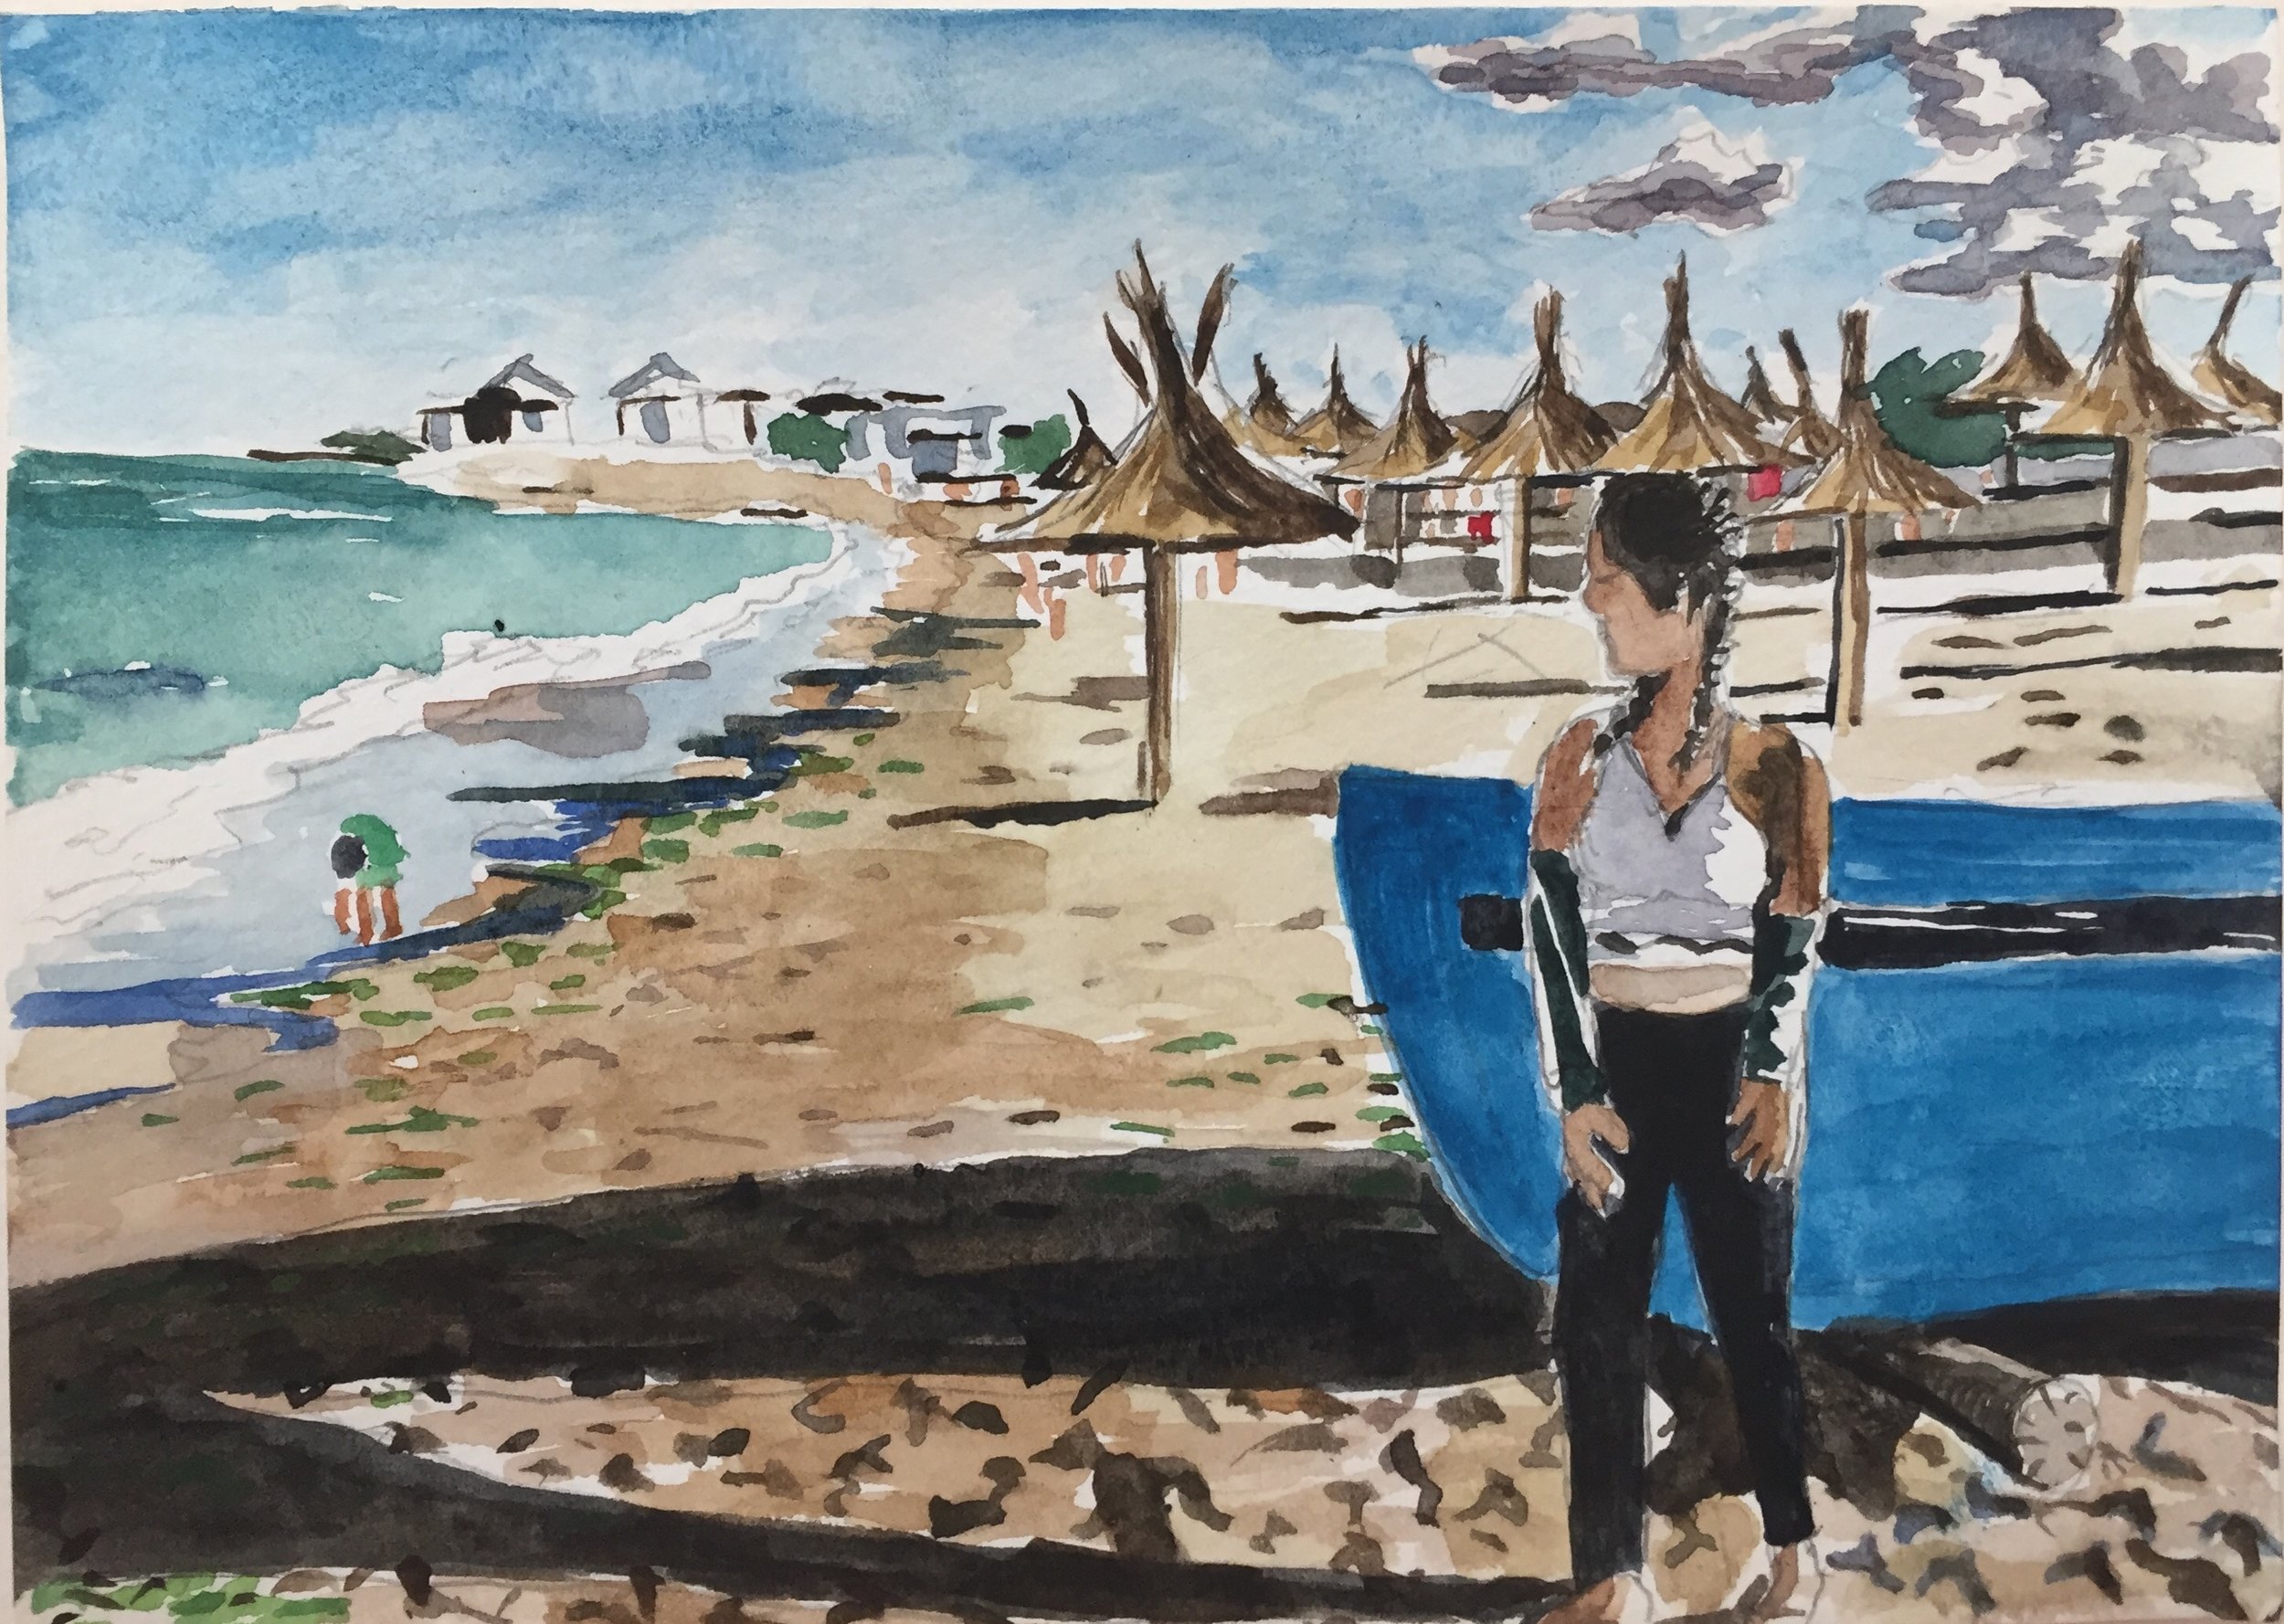 Chloe at the Black Sea, 2019, 4 1/2 x 6 1/2 in., watercolor